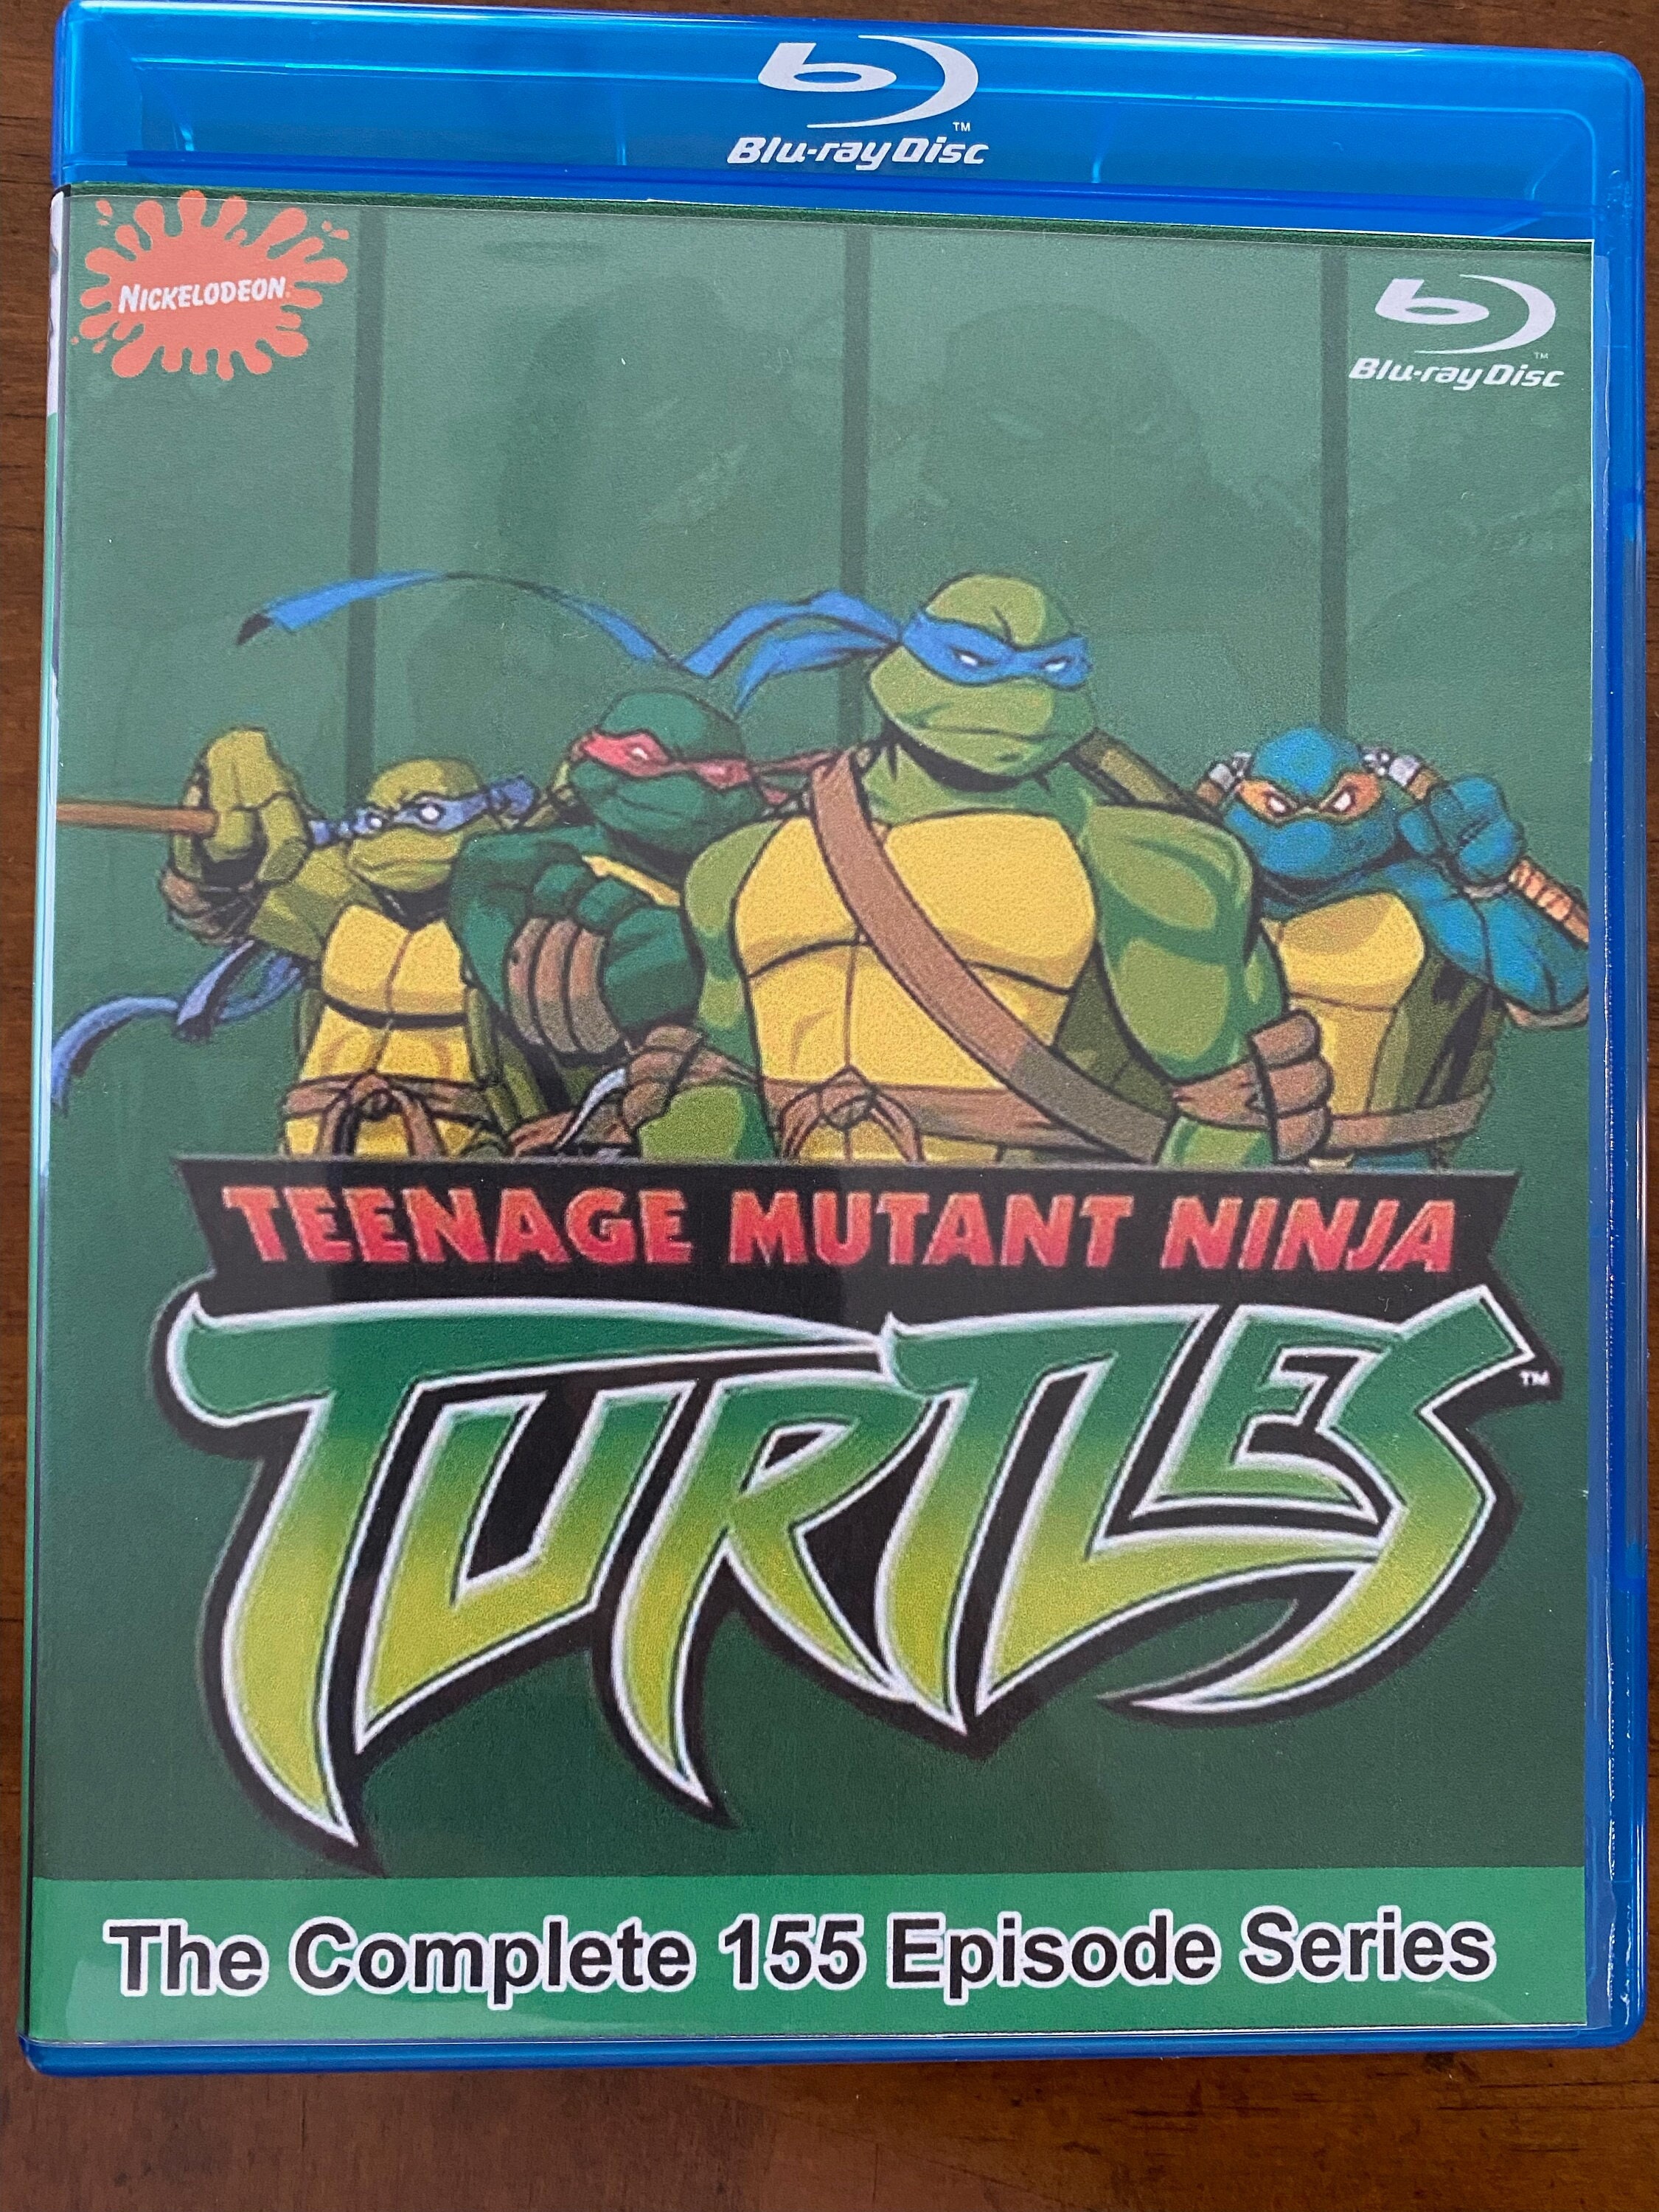 Teenage Mutant Ninja Turtles (2003): The Ultimate Collection [DVD]